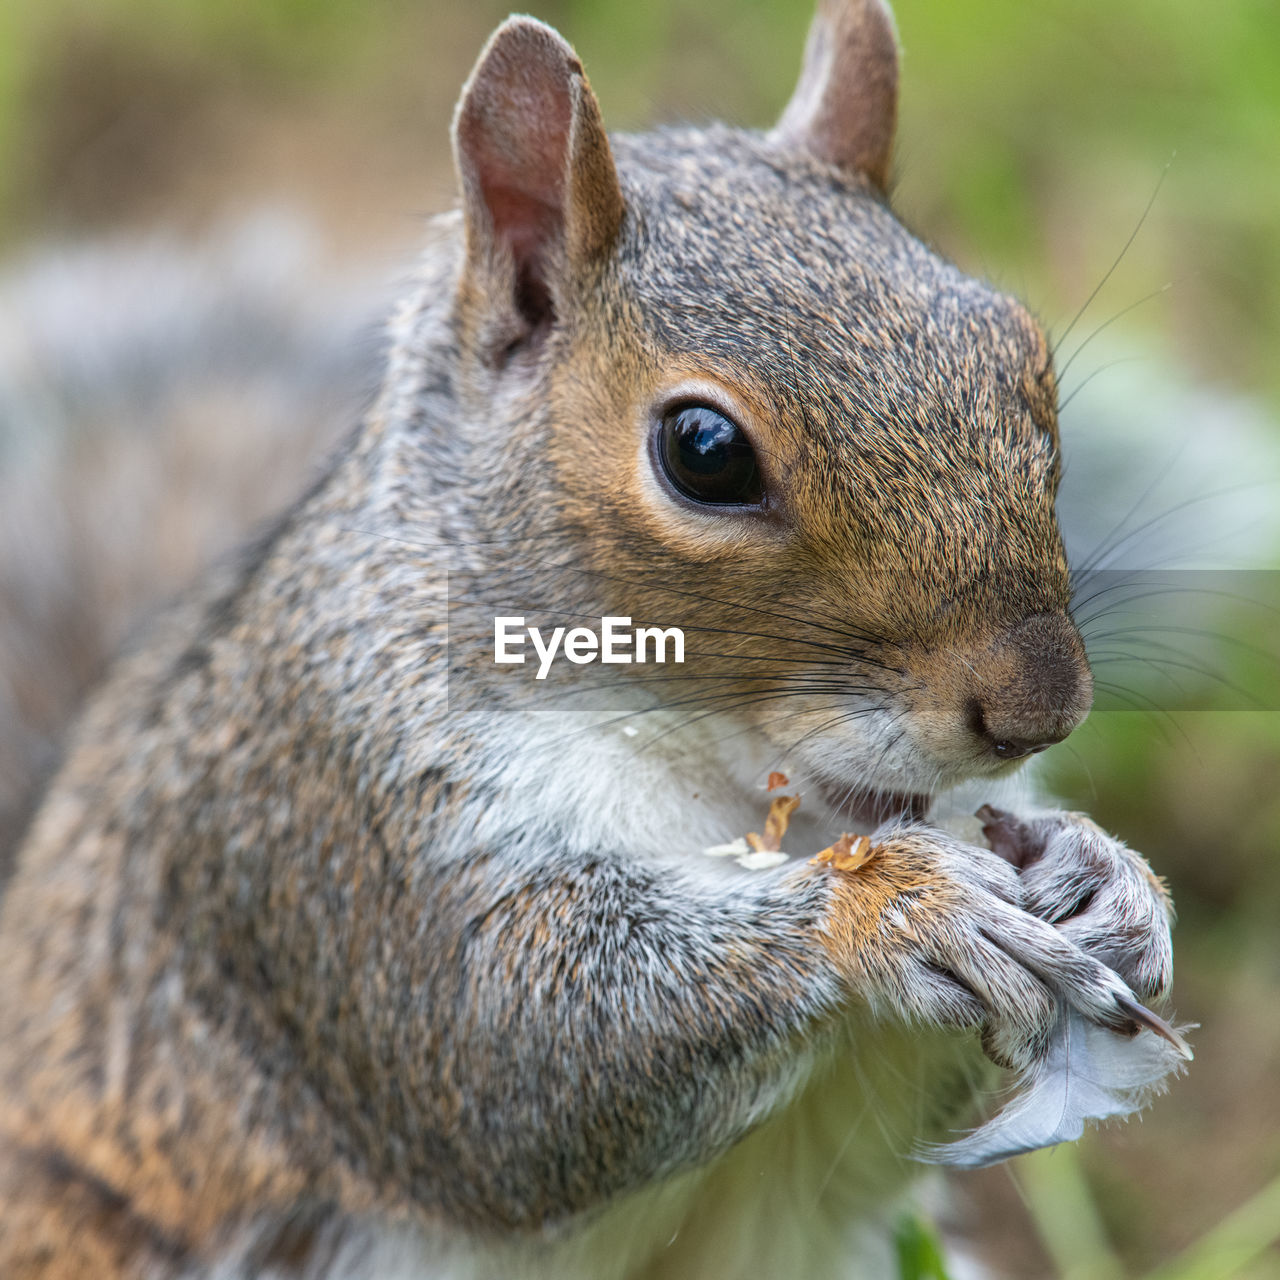 Portrait of an eastern grey squirrel eating a nut